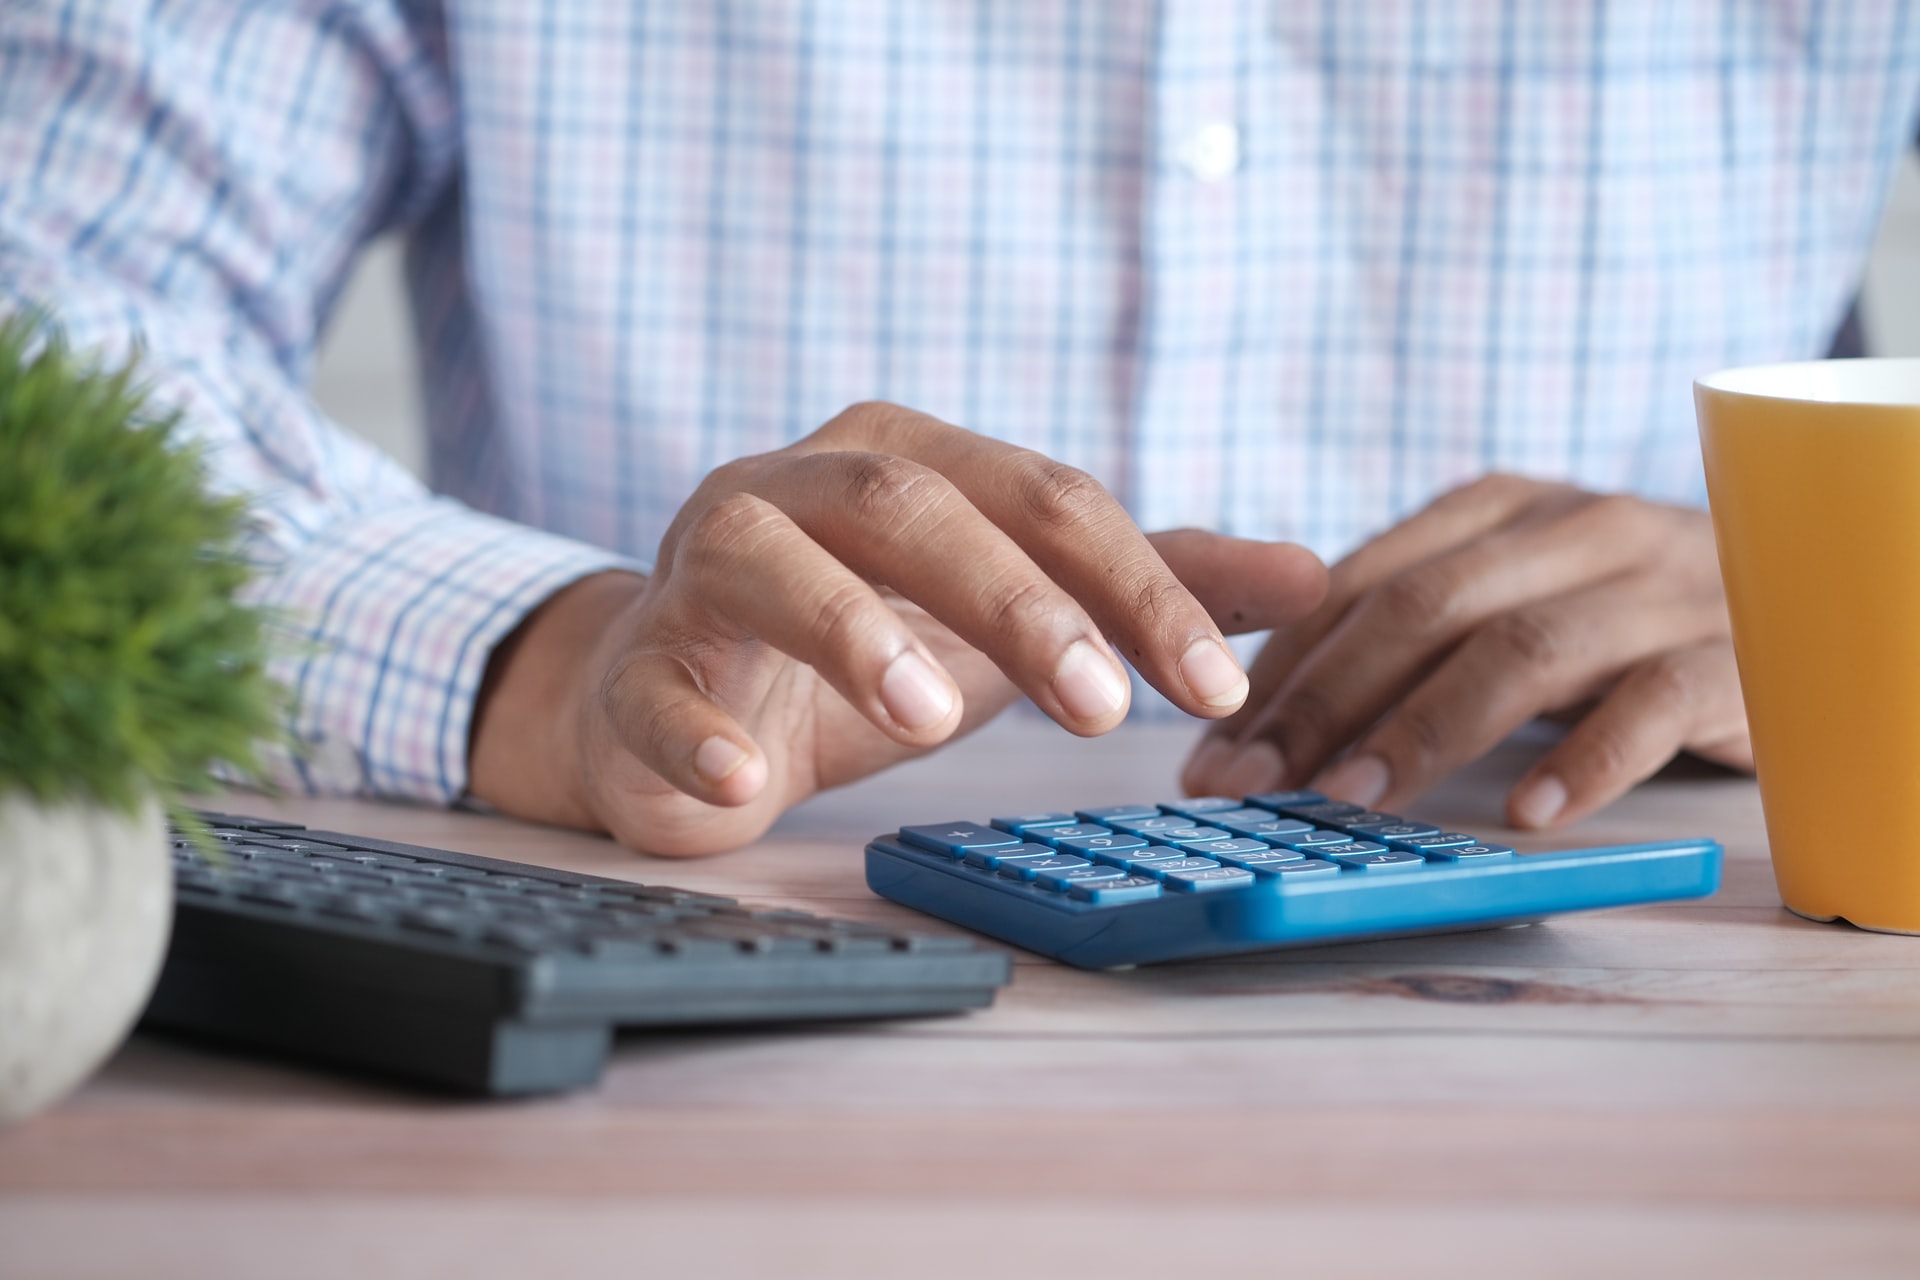 saving for retirement - human hand using calculator on a desk